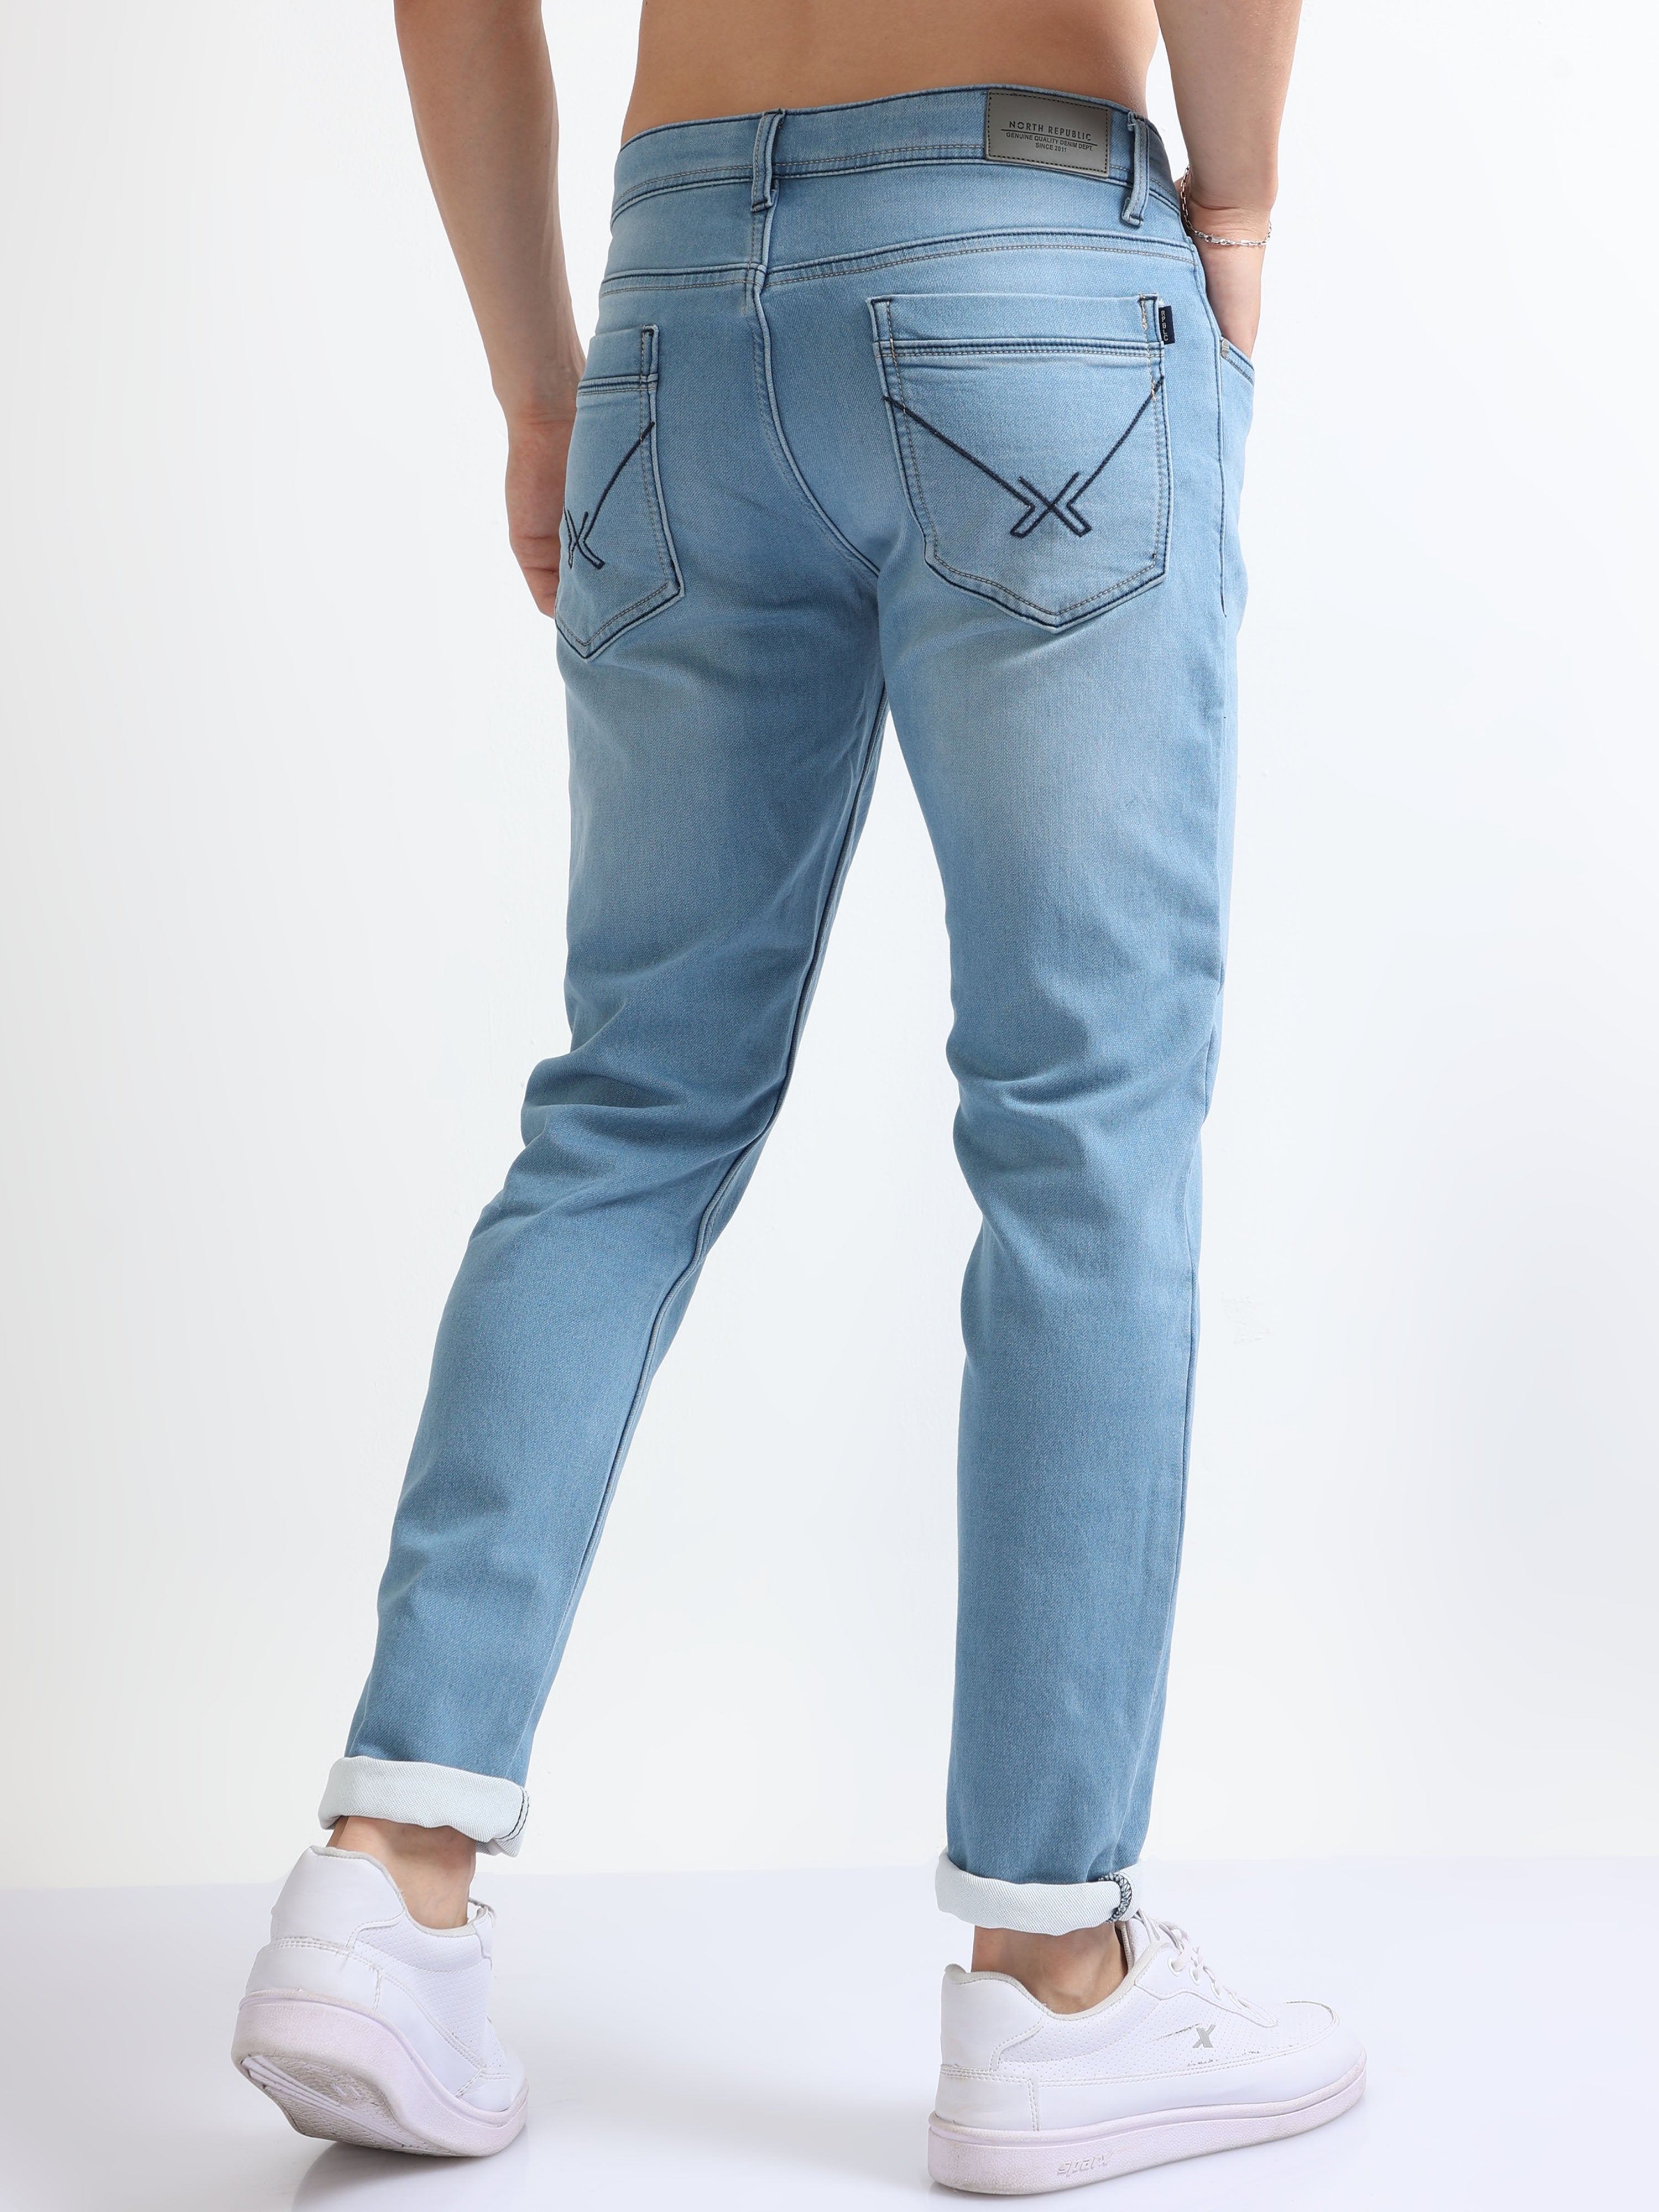 Super Skinny High Jeans - Light denim blue - Ladies | H&M IN